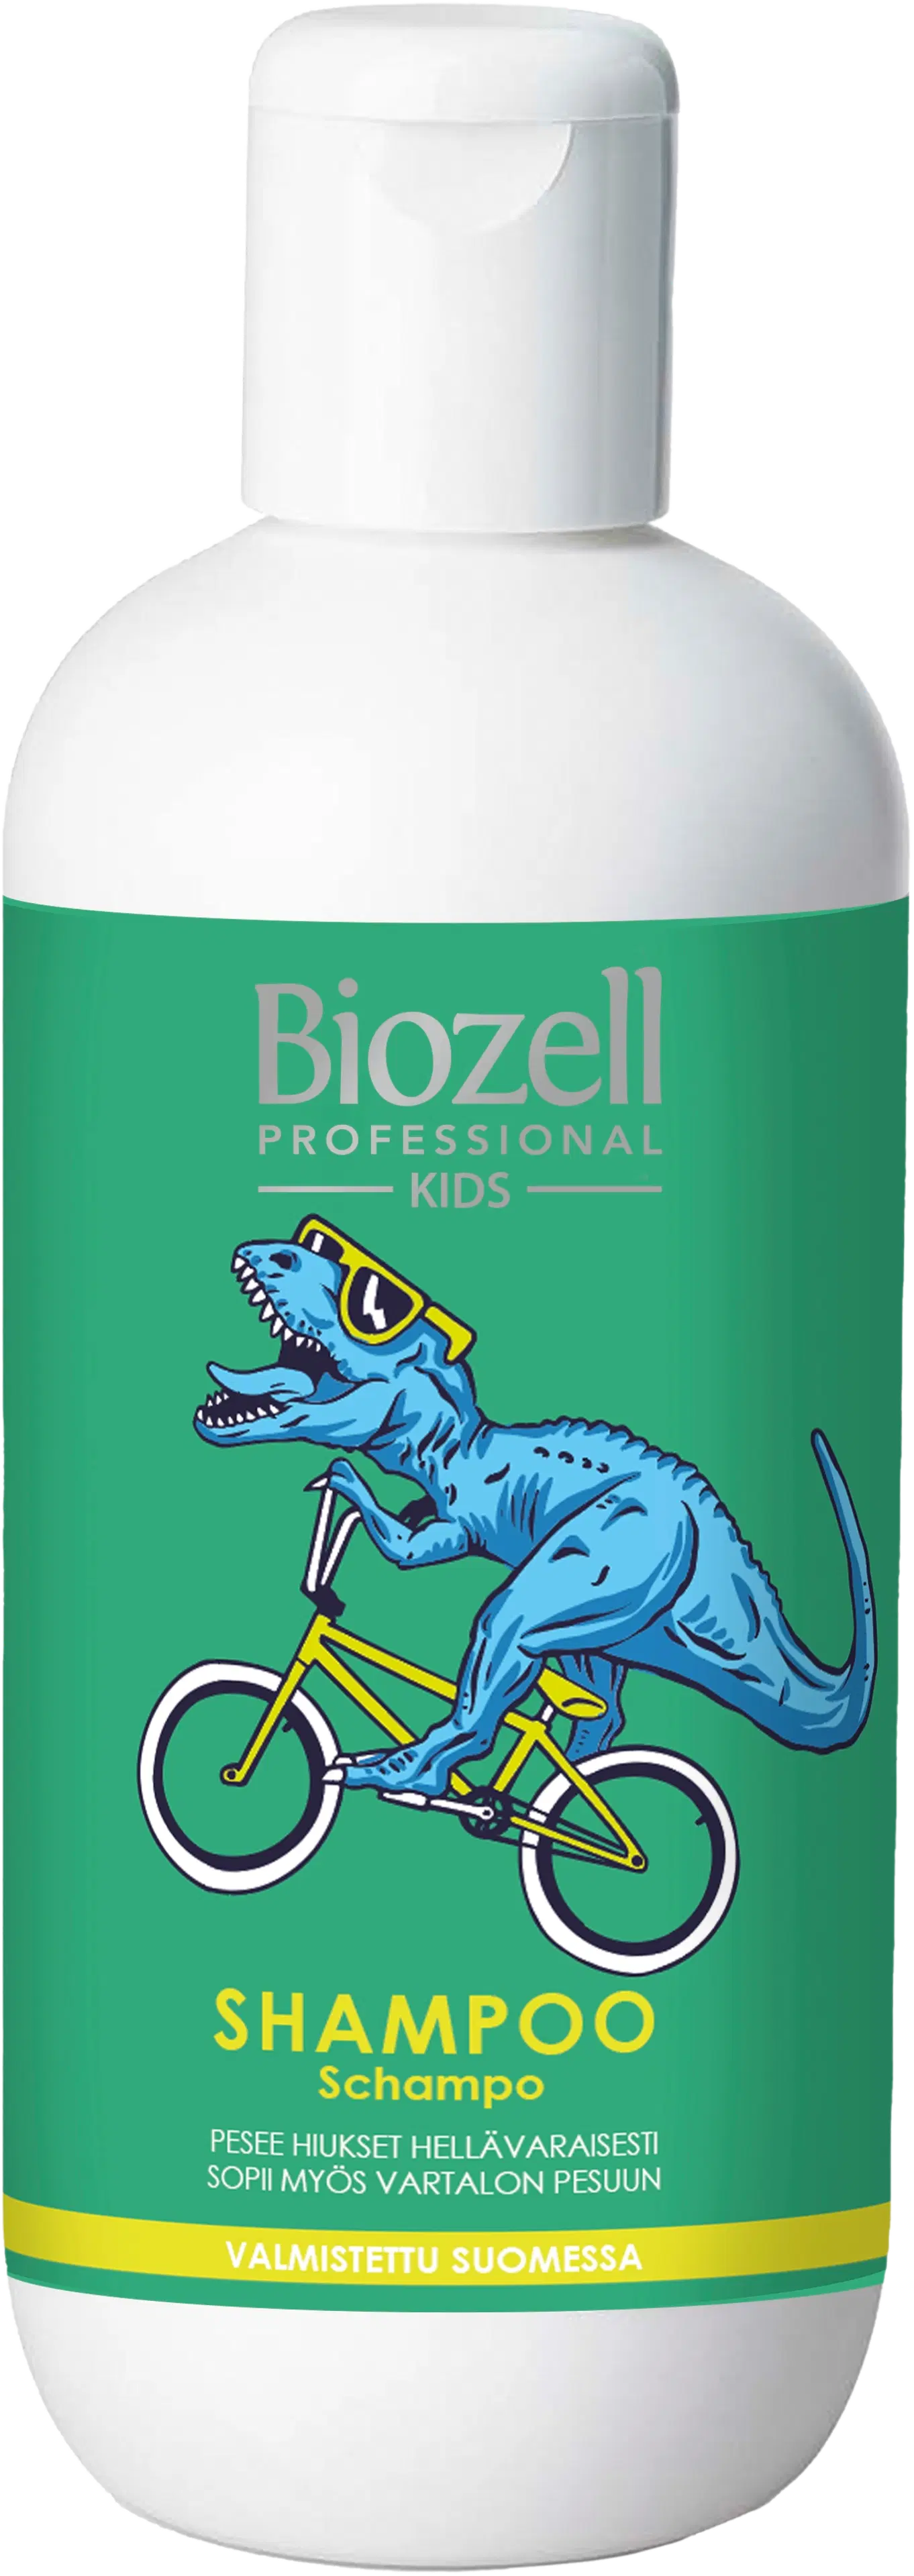 Biozell Kids Lasten shampoo 300ml